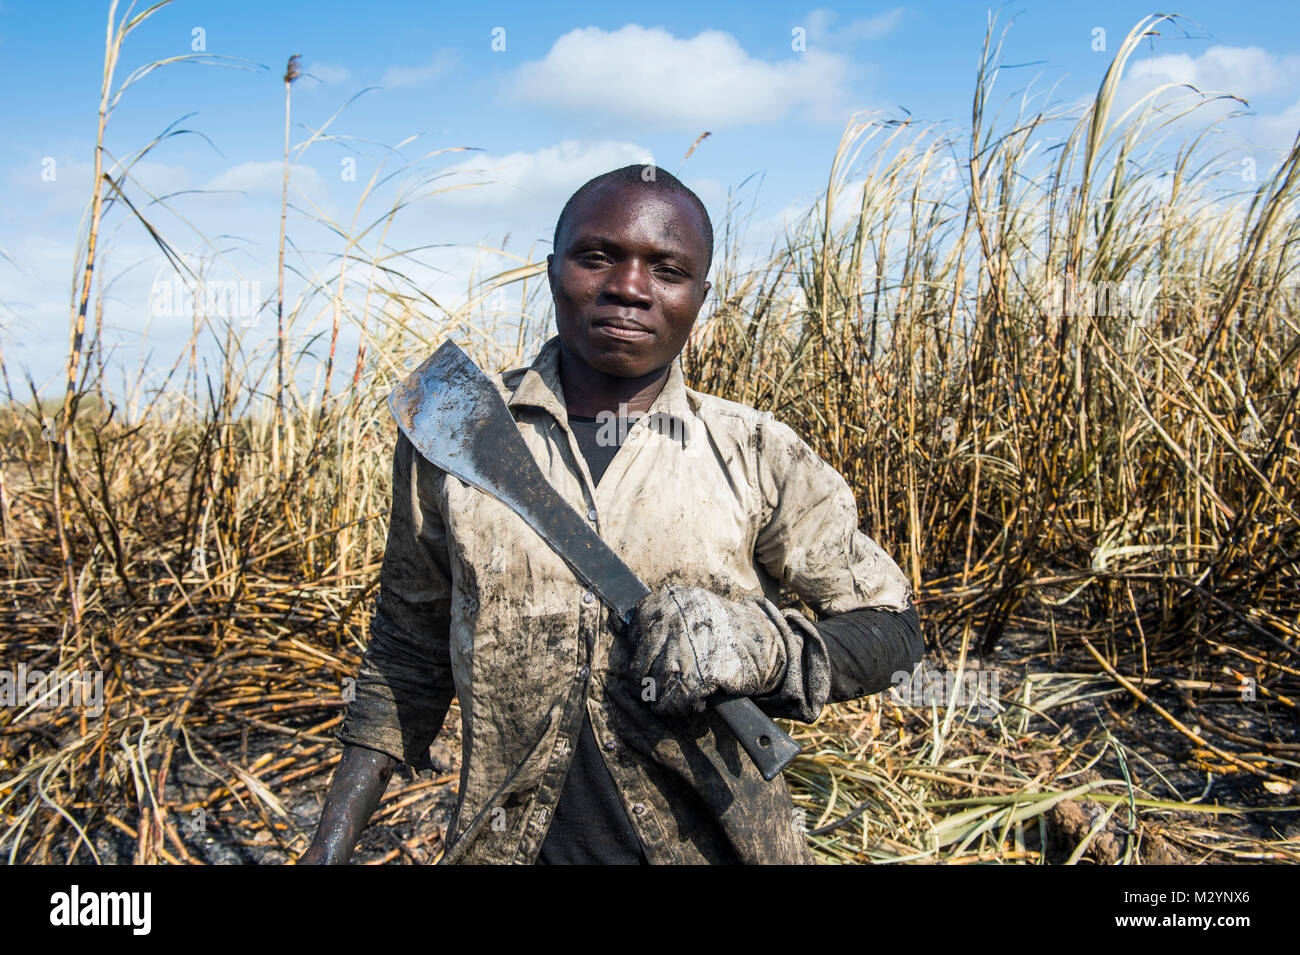 Sugar cane cutter in the burned sugar cane fields, Nchalo, Malawi, Africa  Stock Photo - Alamy